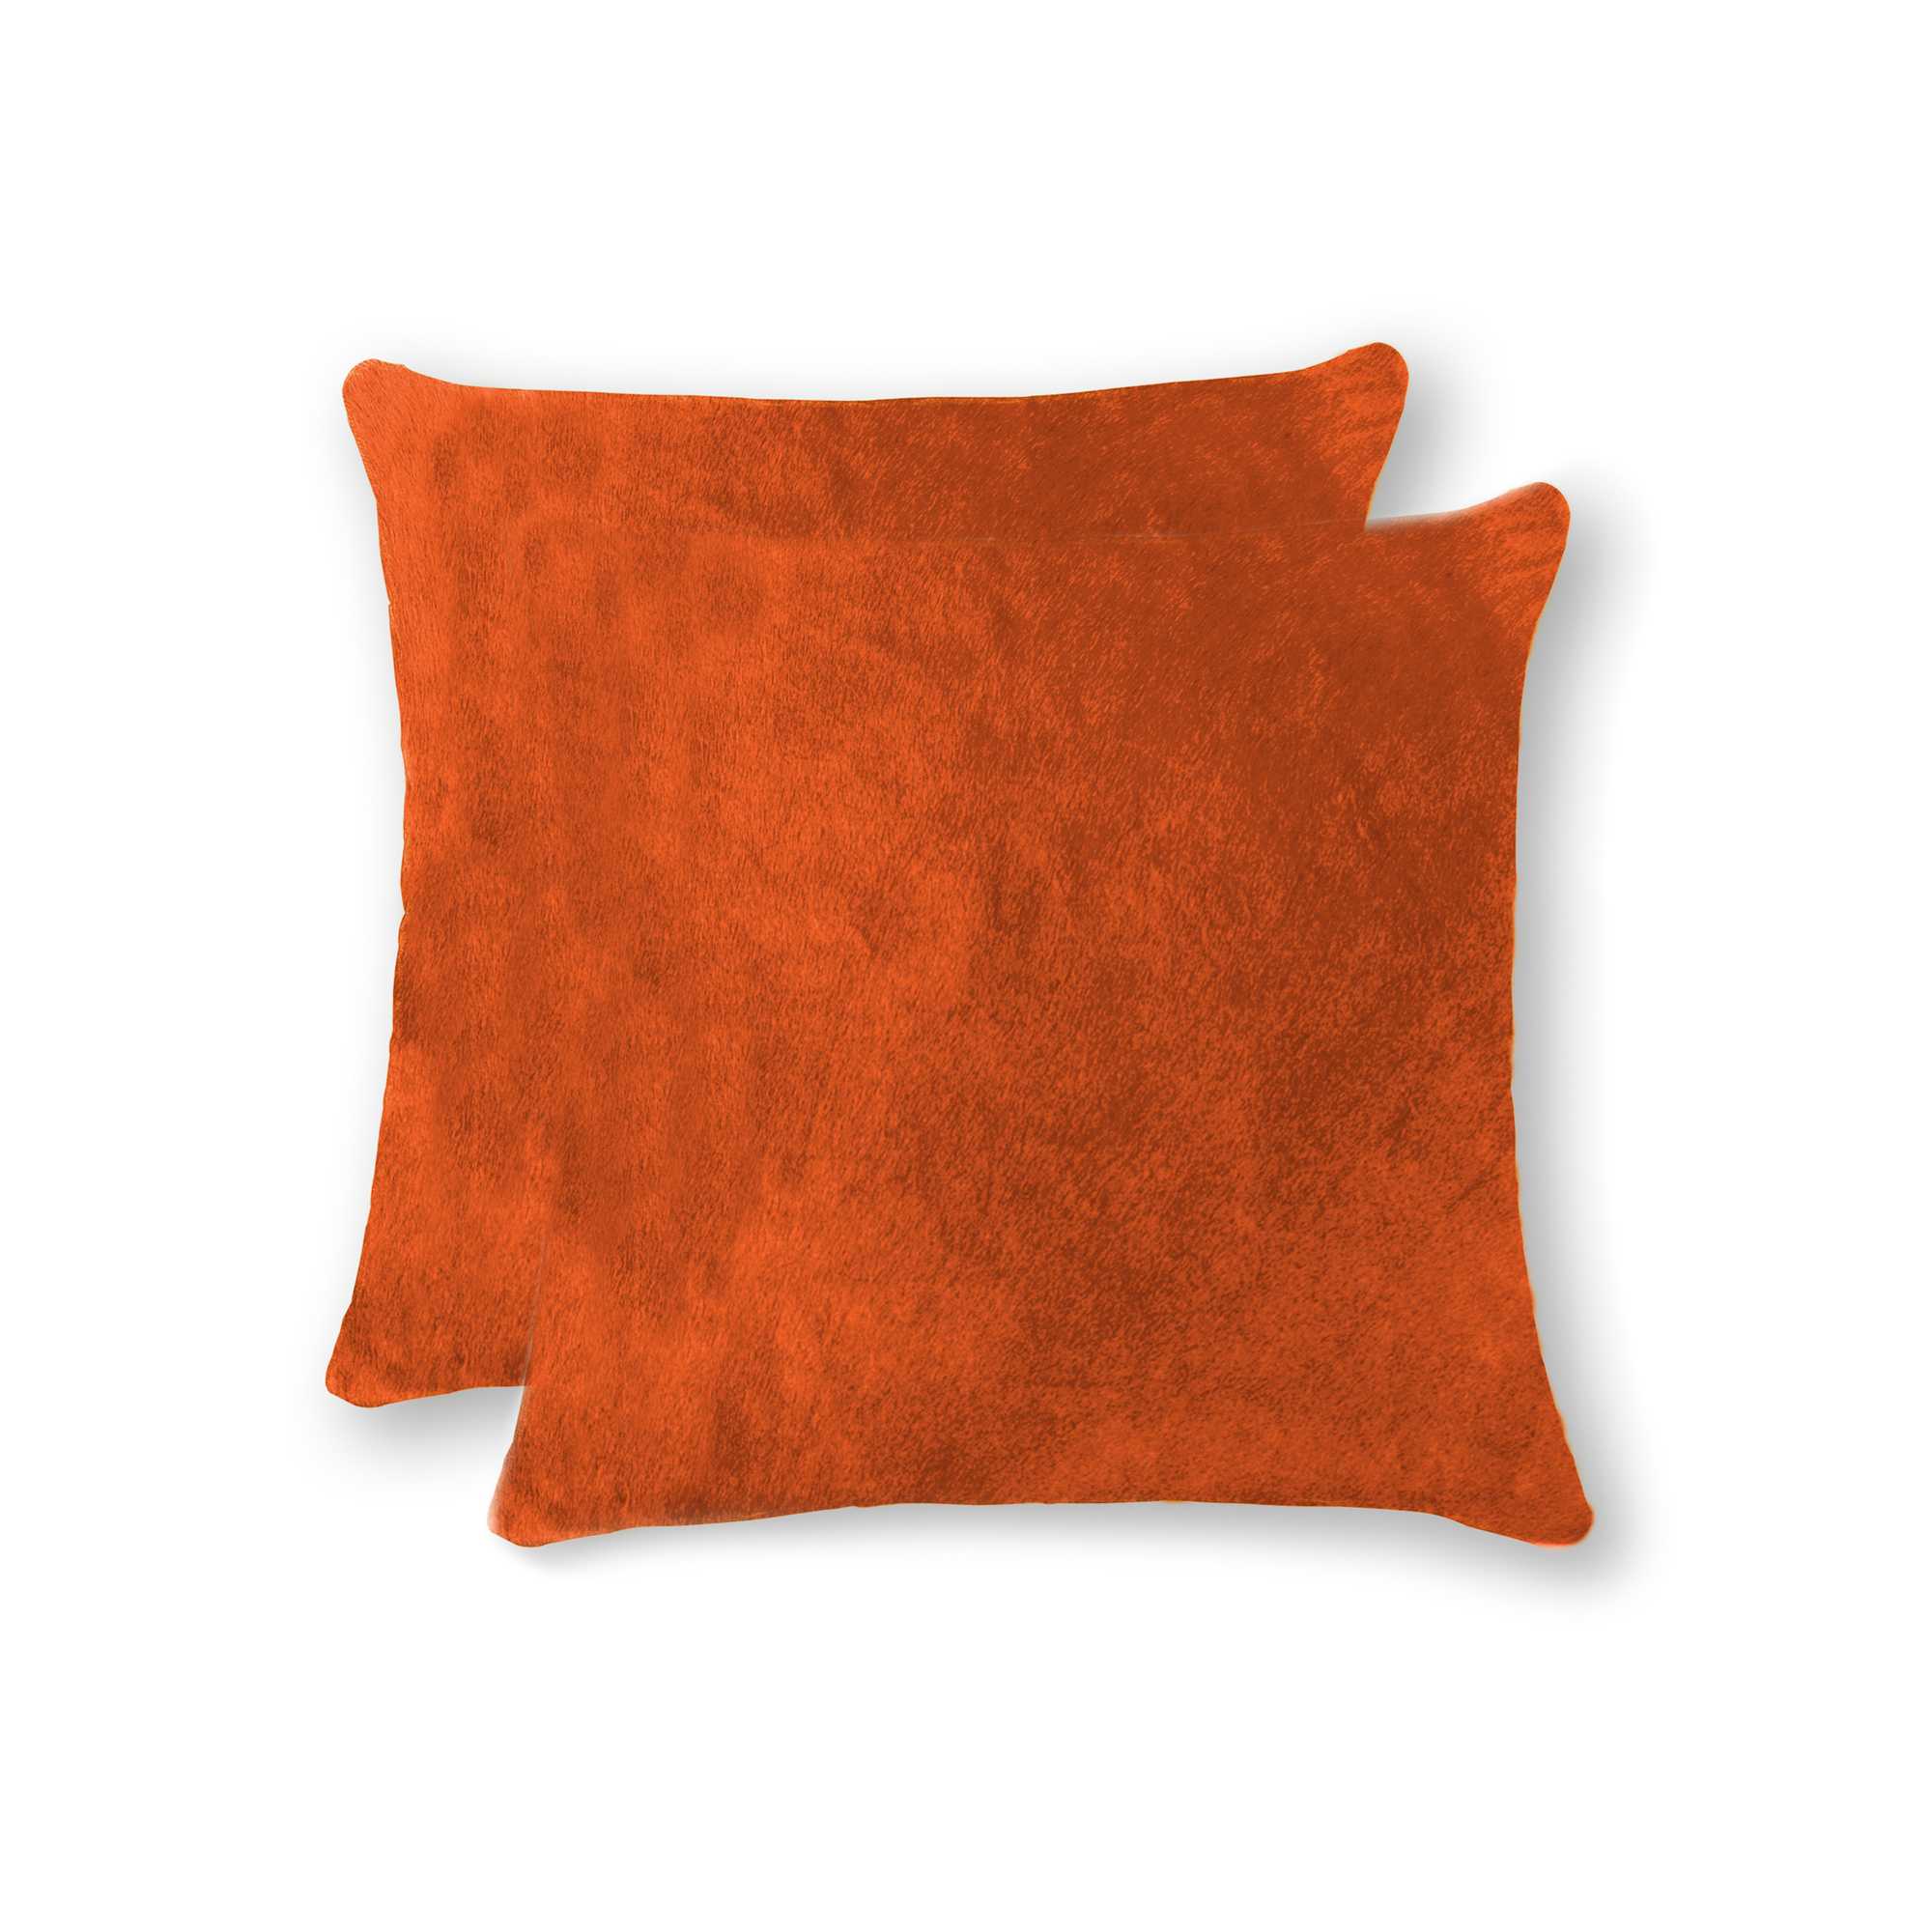 18" x 18" x 5" Orange Cowhide - Pillow 2-Pack